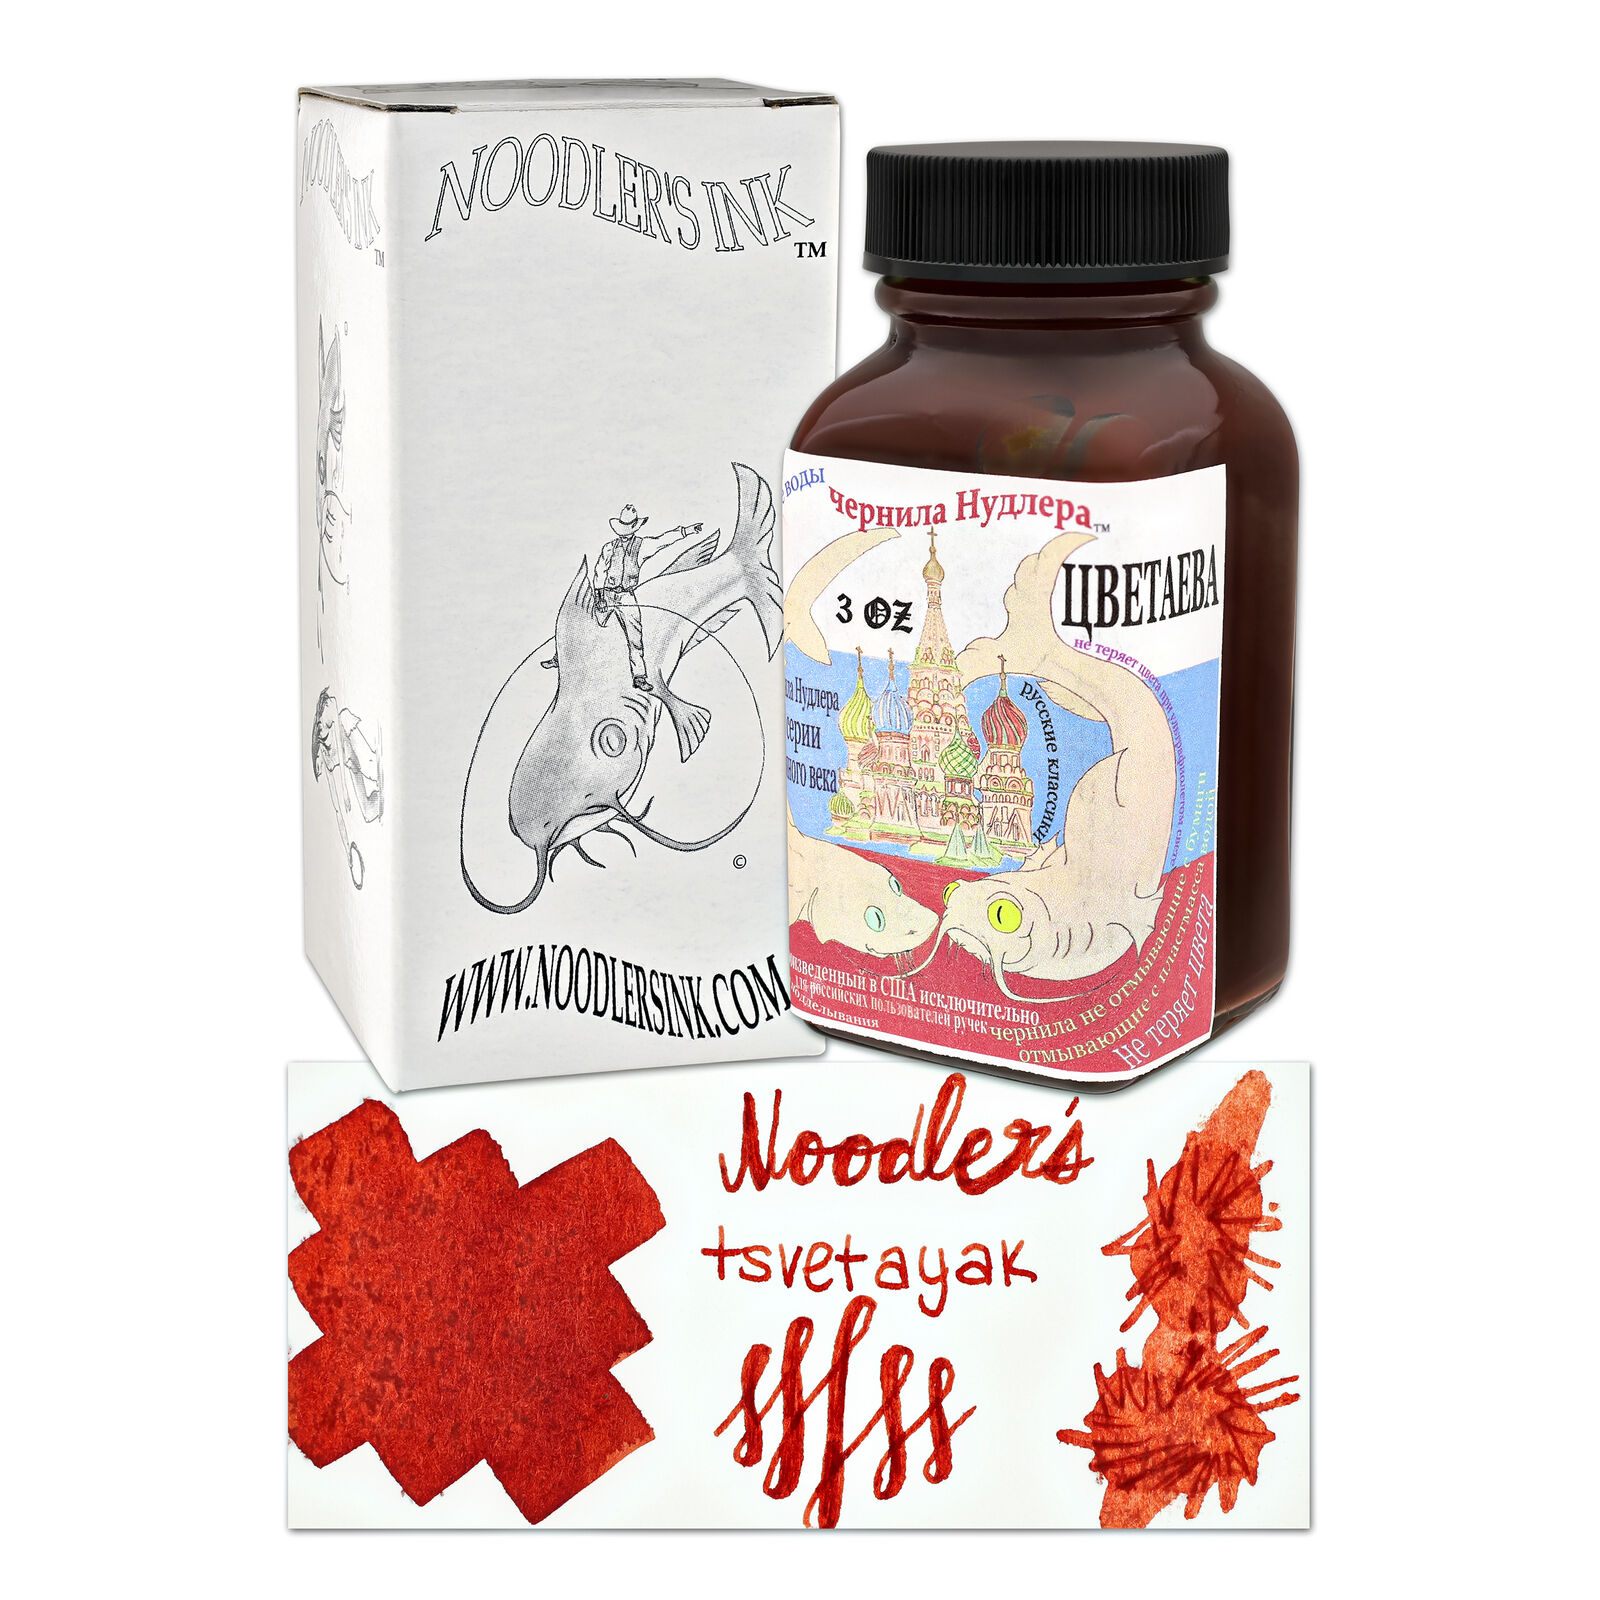 Noodler’s Bottled Ink for Fountain Pen- Russian Series in Tsvetayak (Red) - 3oz